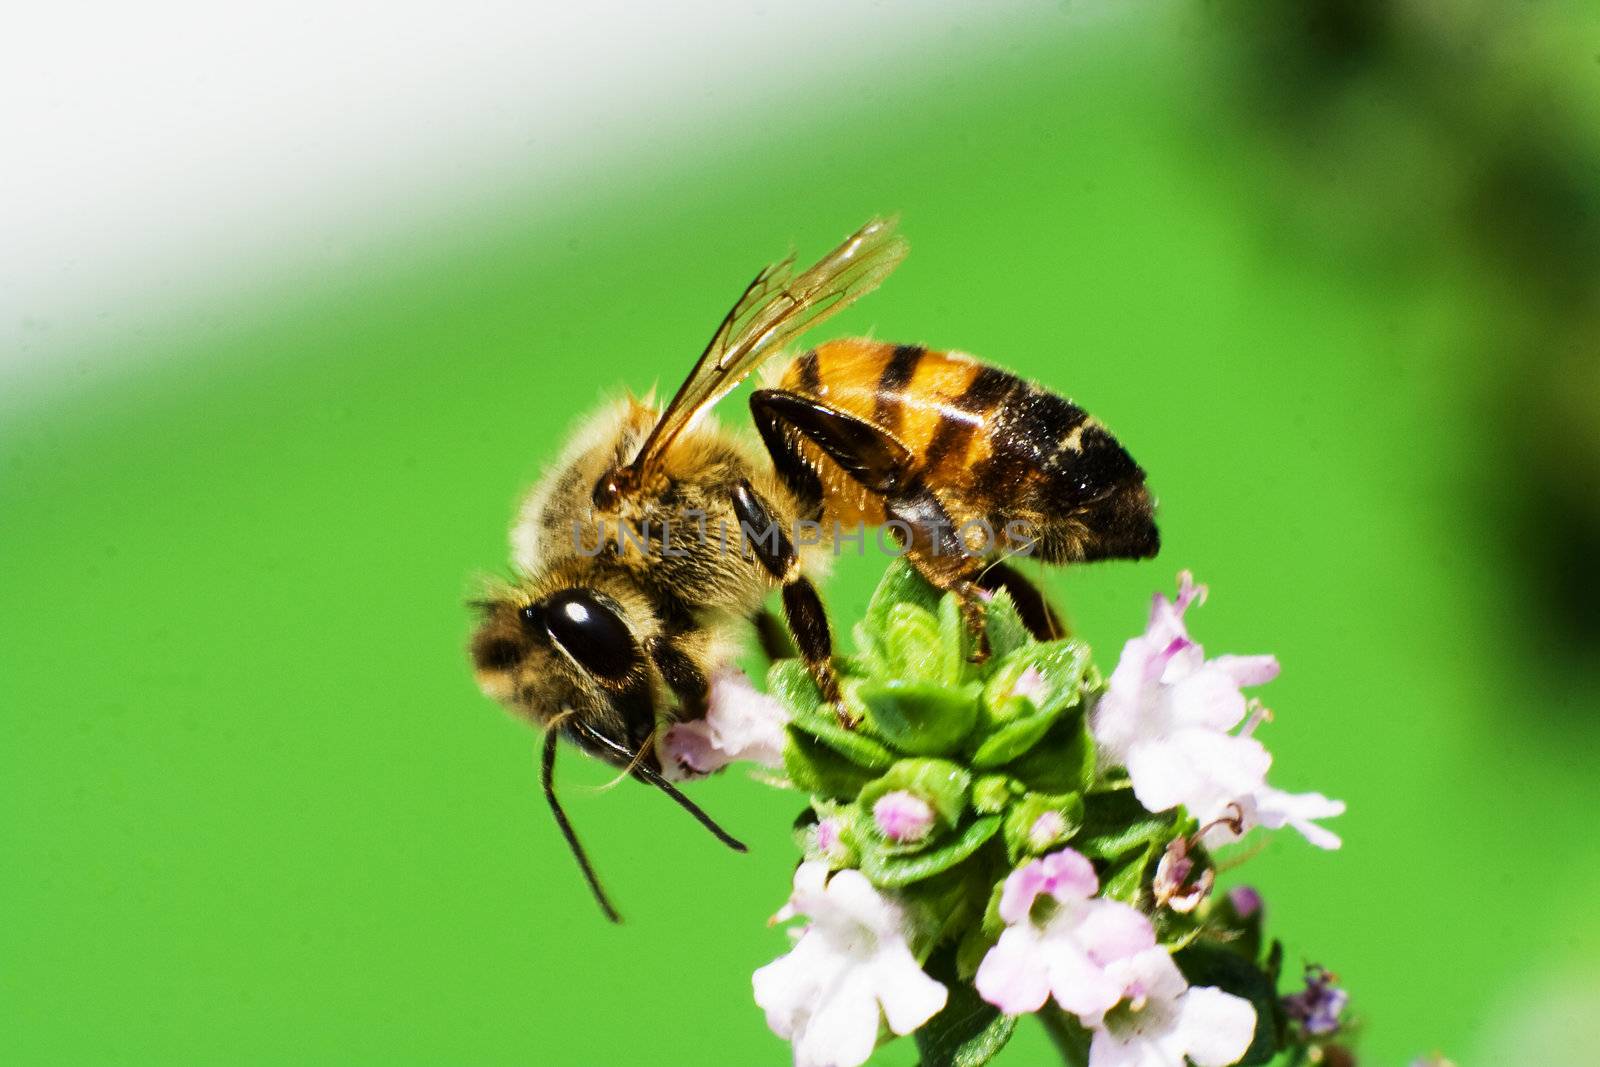 Honey Bee on thyme by kobus_peche